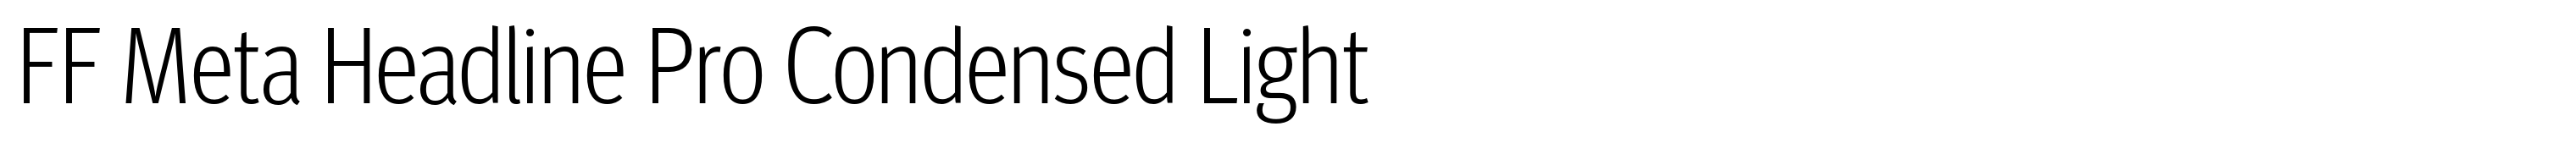 FF Meta Headline Pro Condensed Light